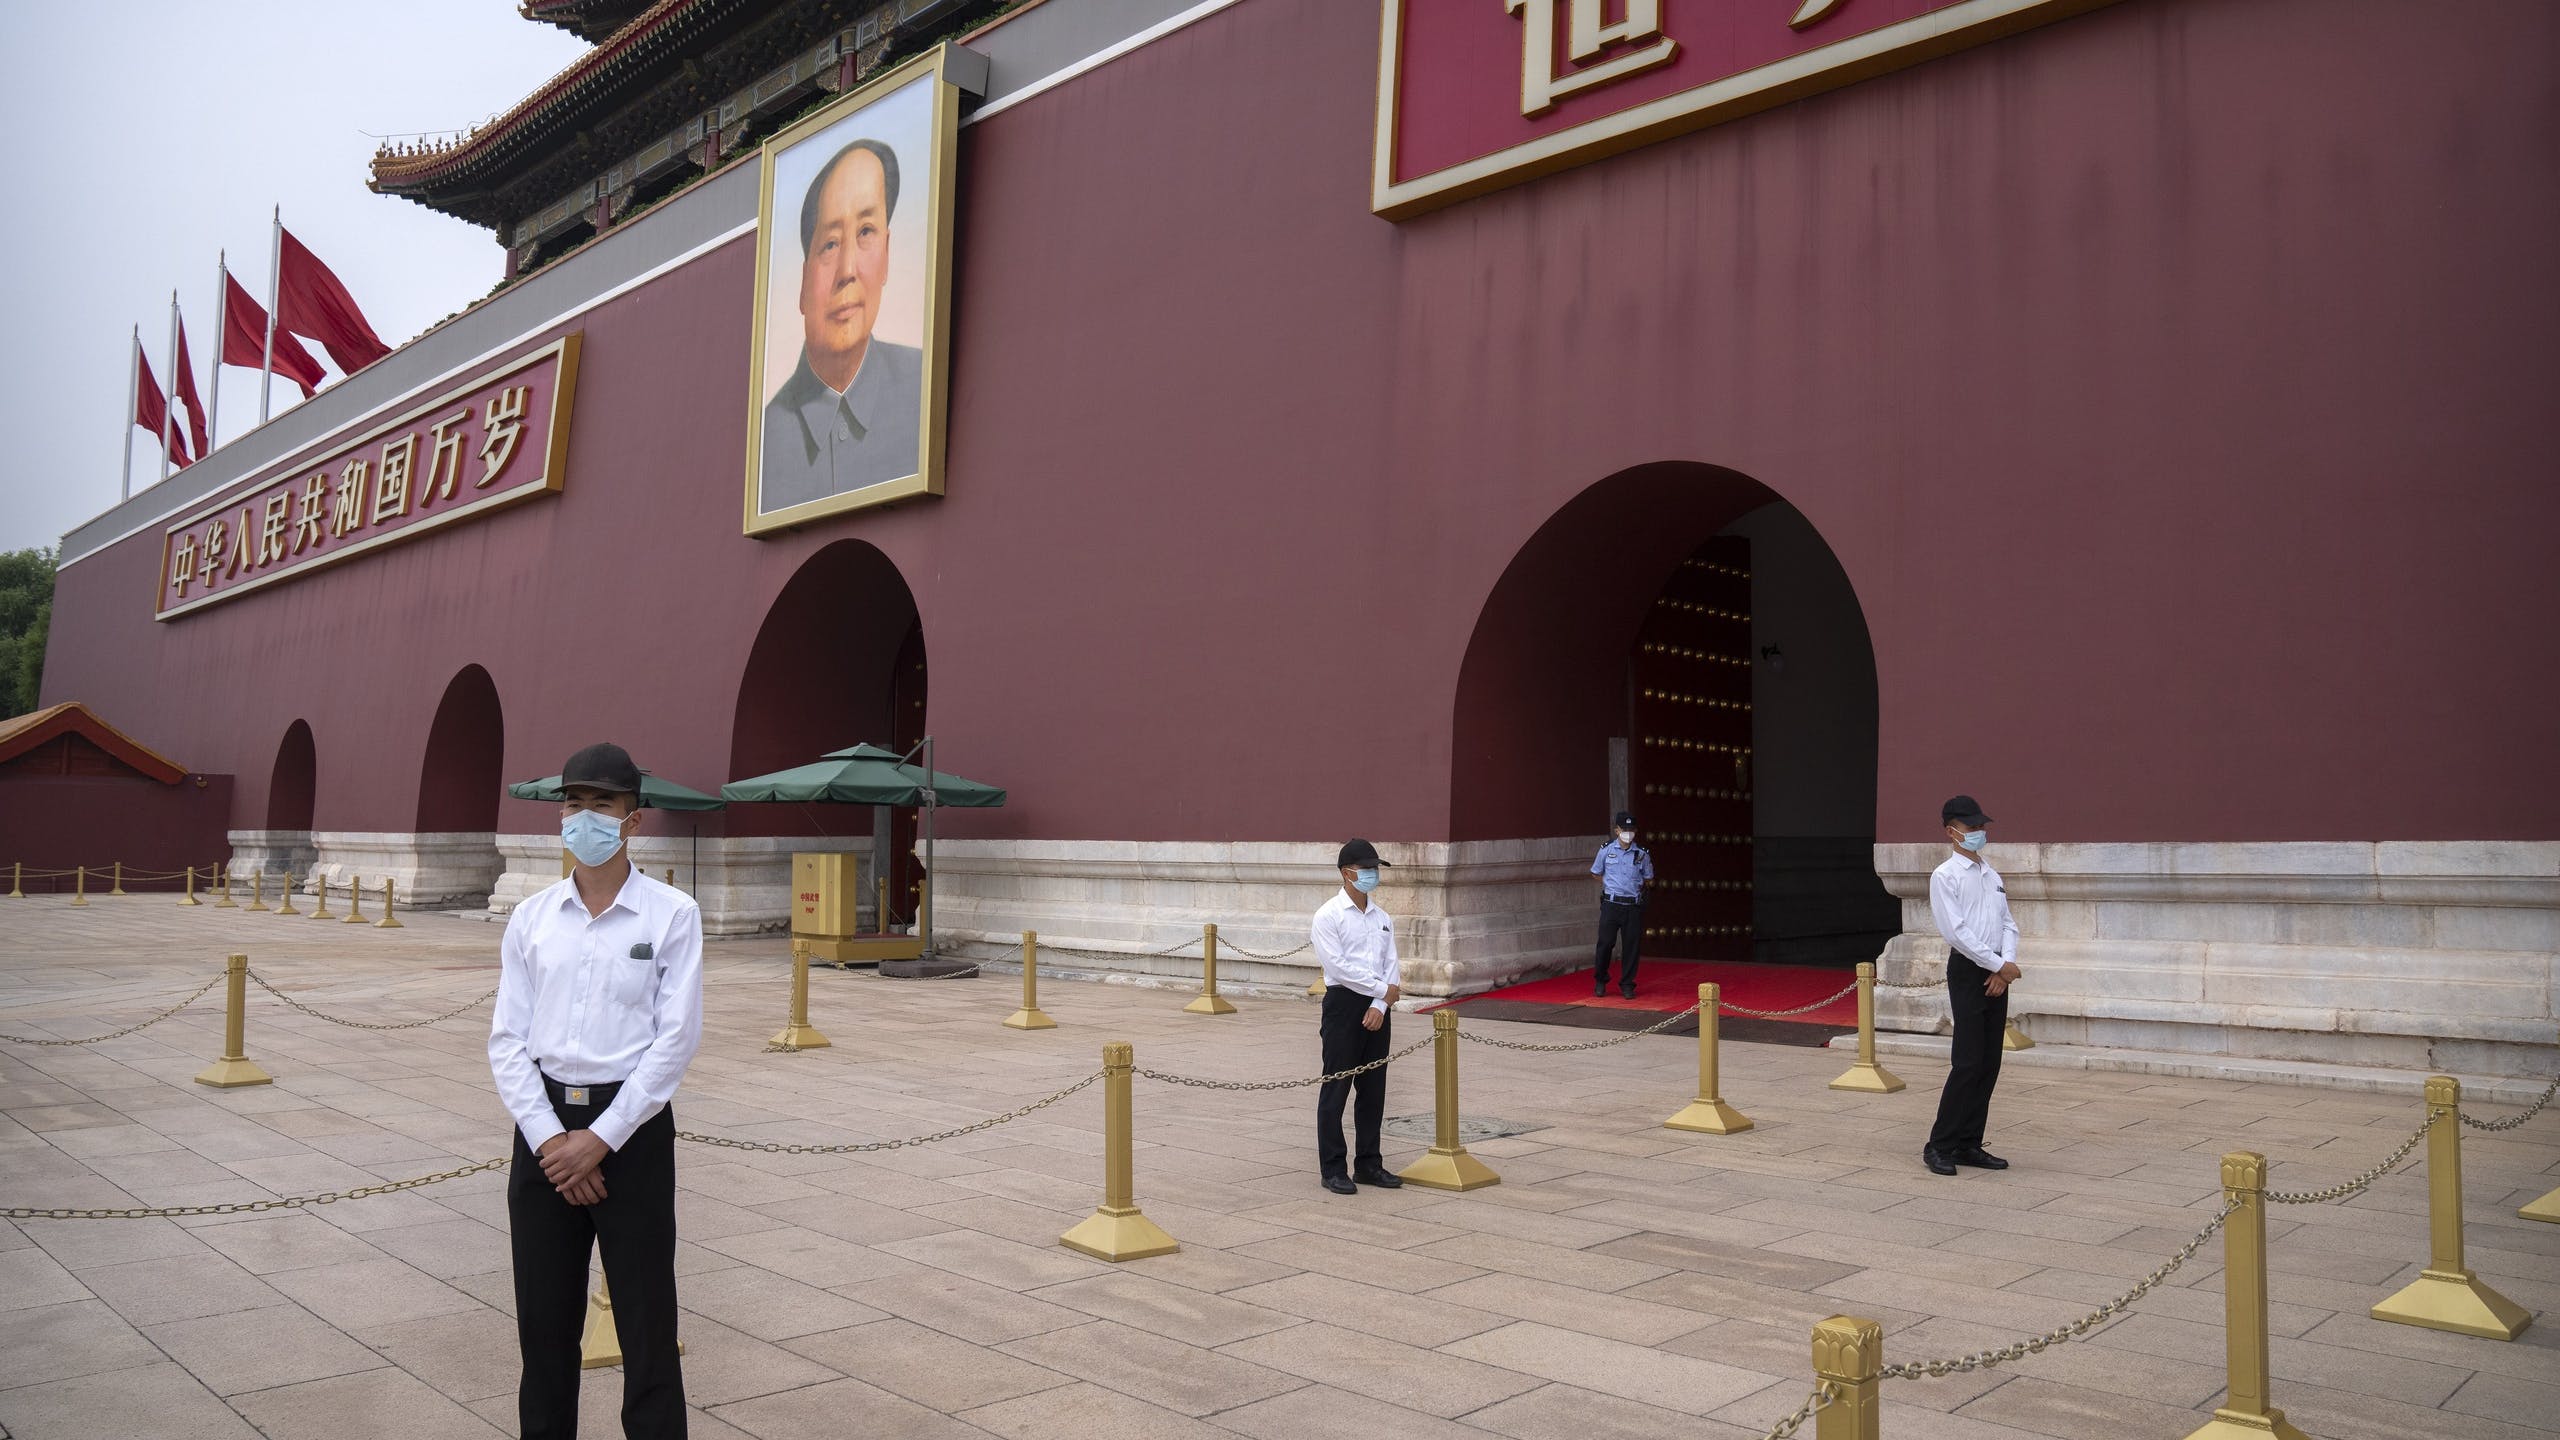 Portrait of Mao Zedong at the Tiananmen Gate in Tiananmen Square in Beijing. 